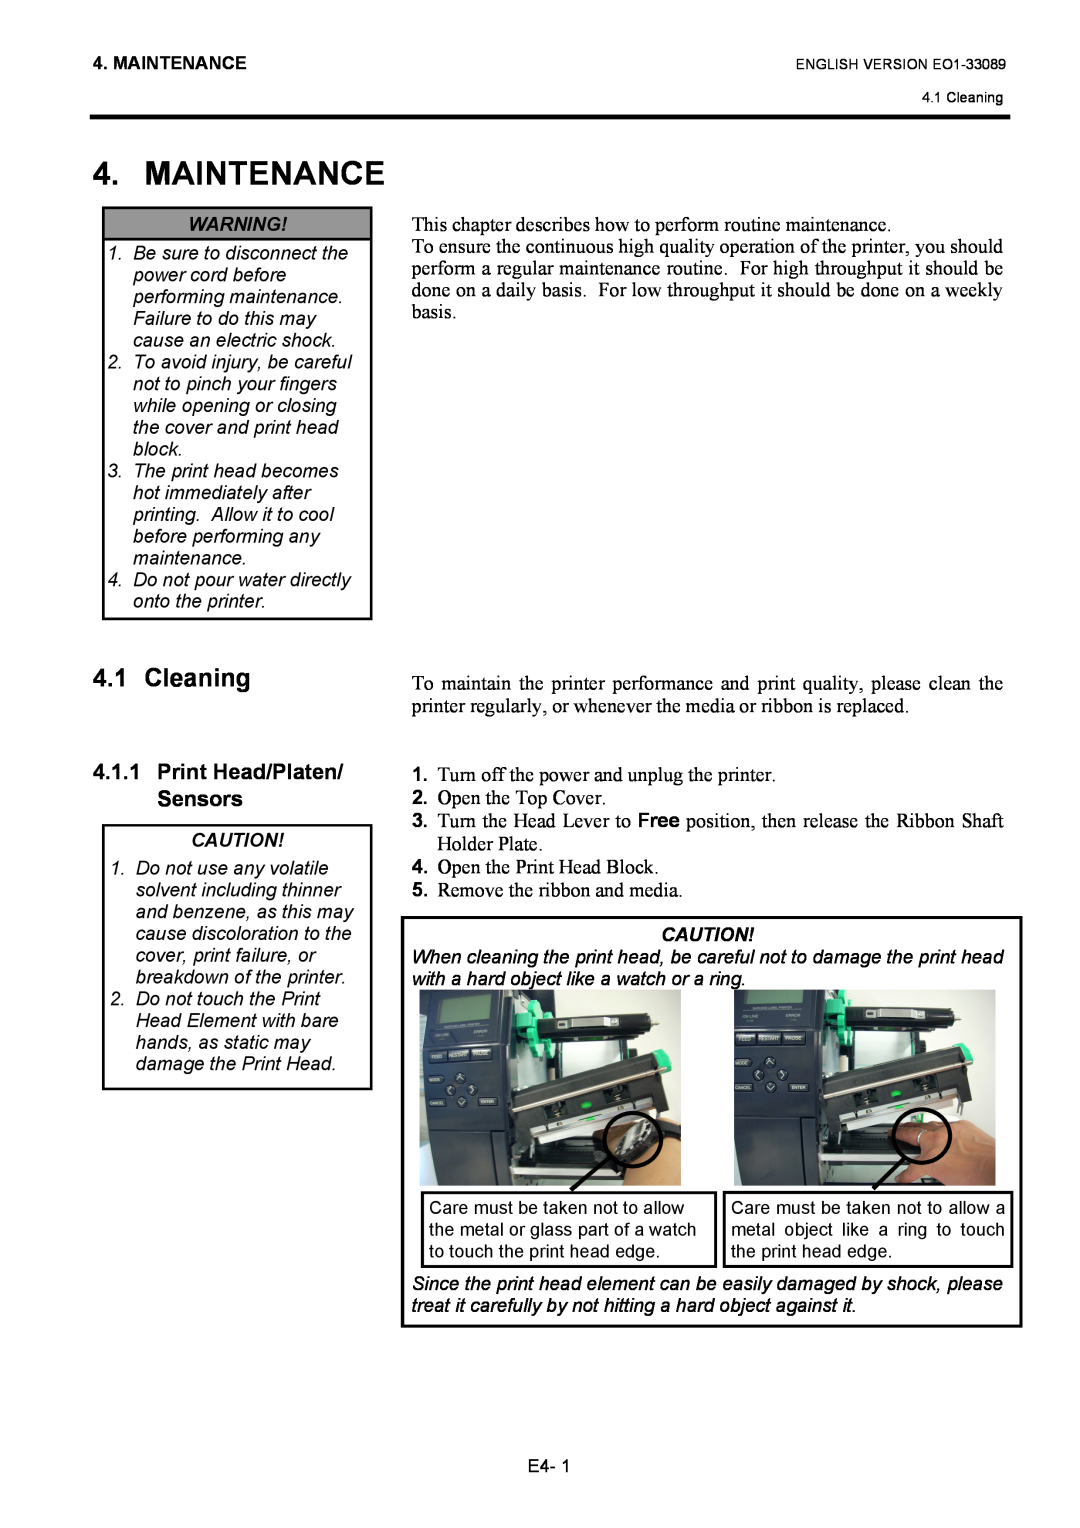 Toshiba B-EX4T1 manual Maintenance, Cleaning, Print Head/Platen/ Sensors 